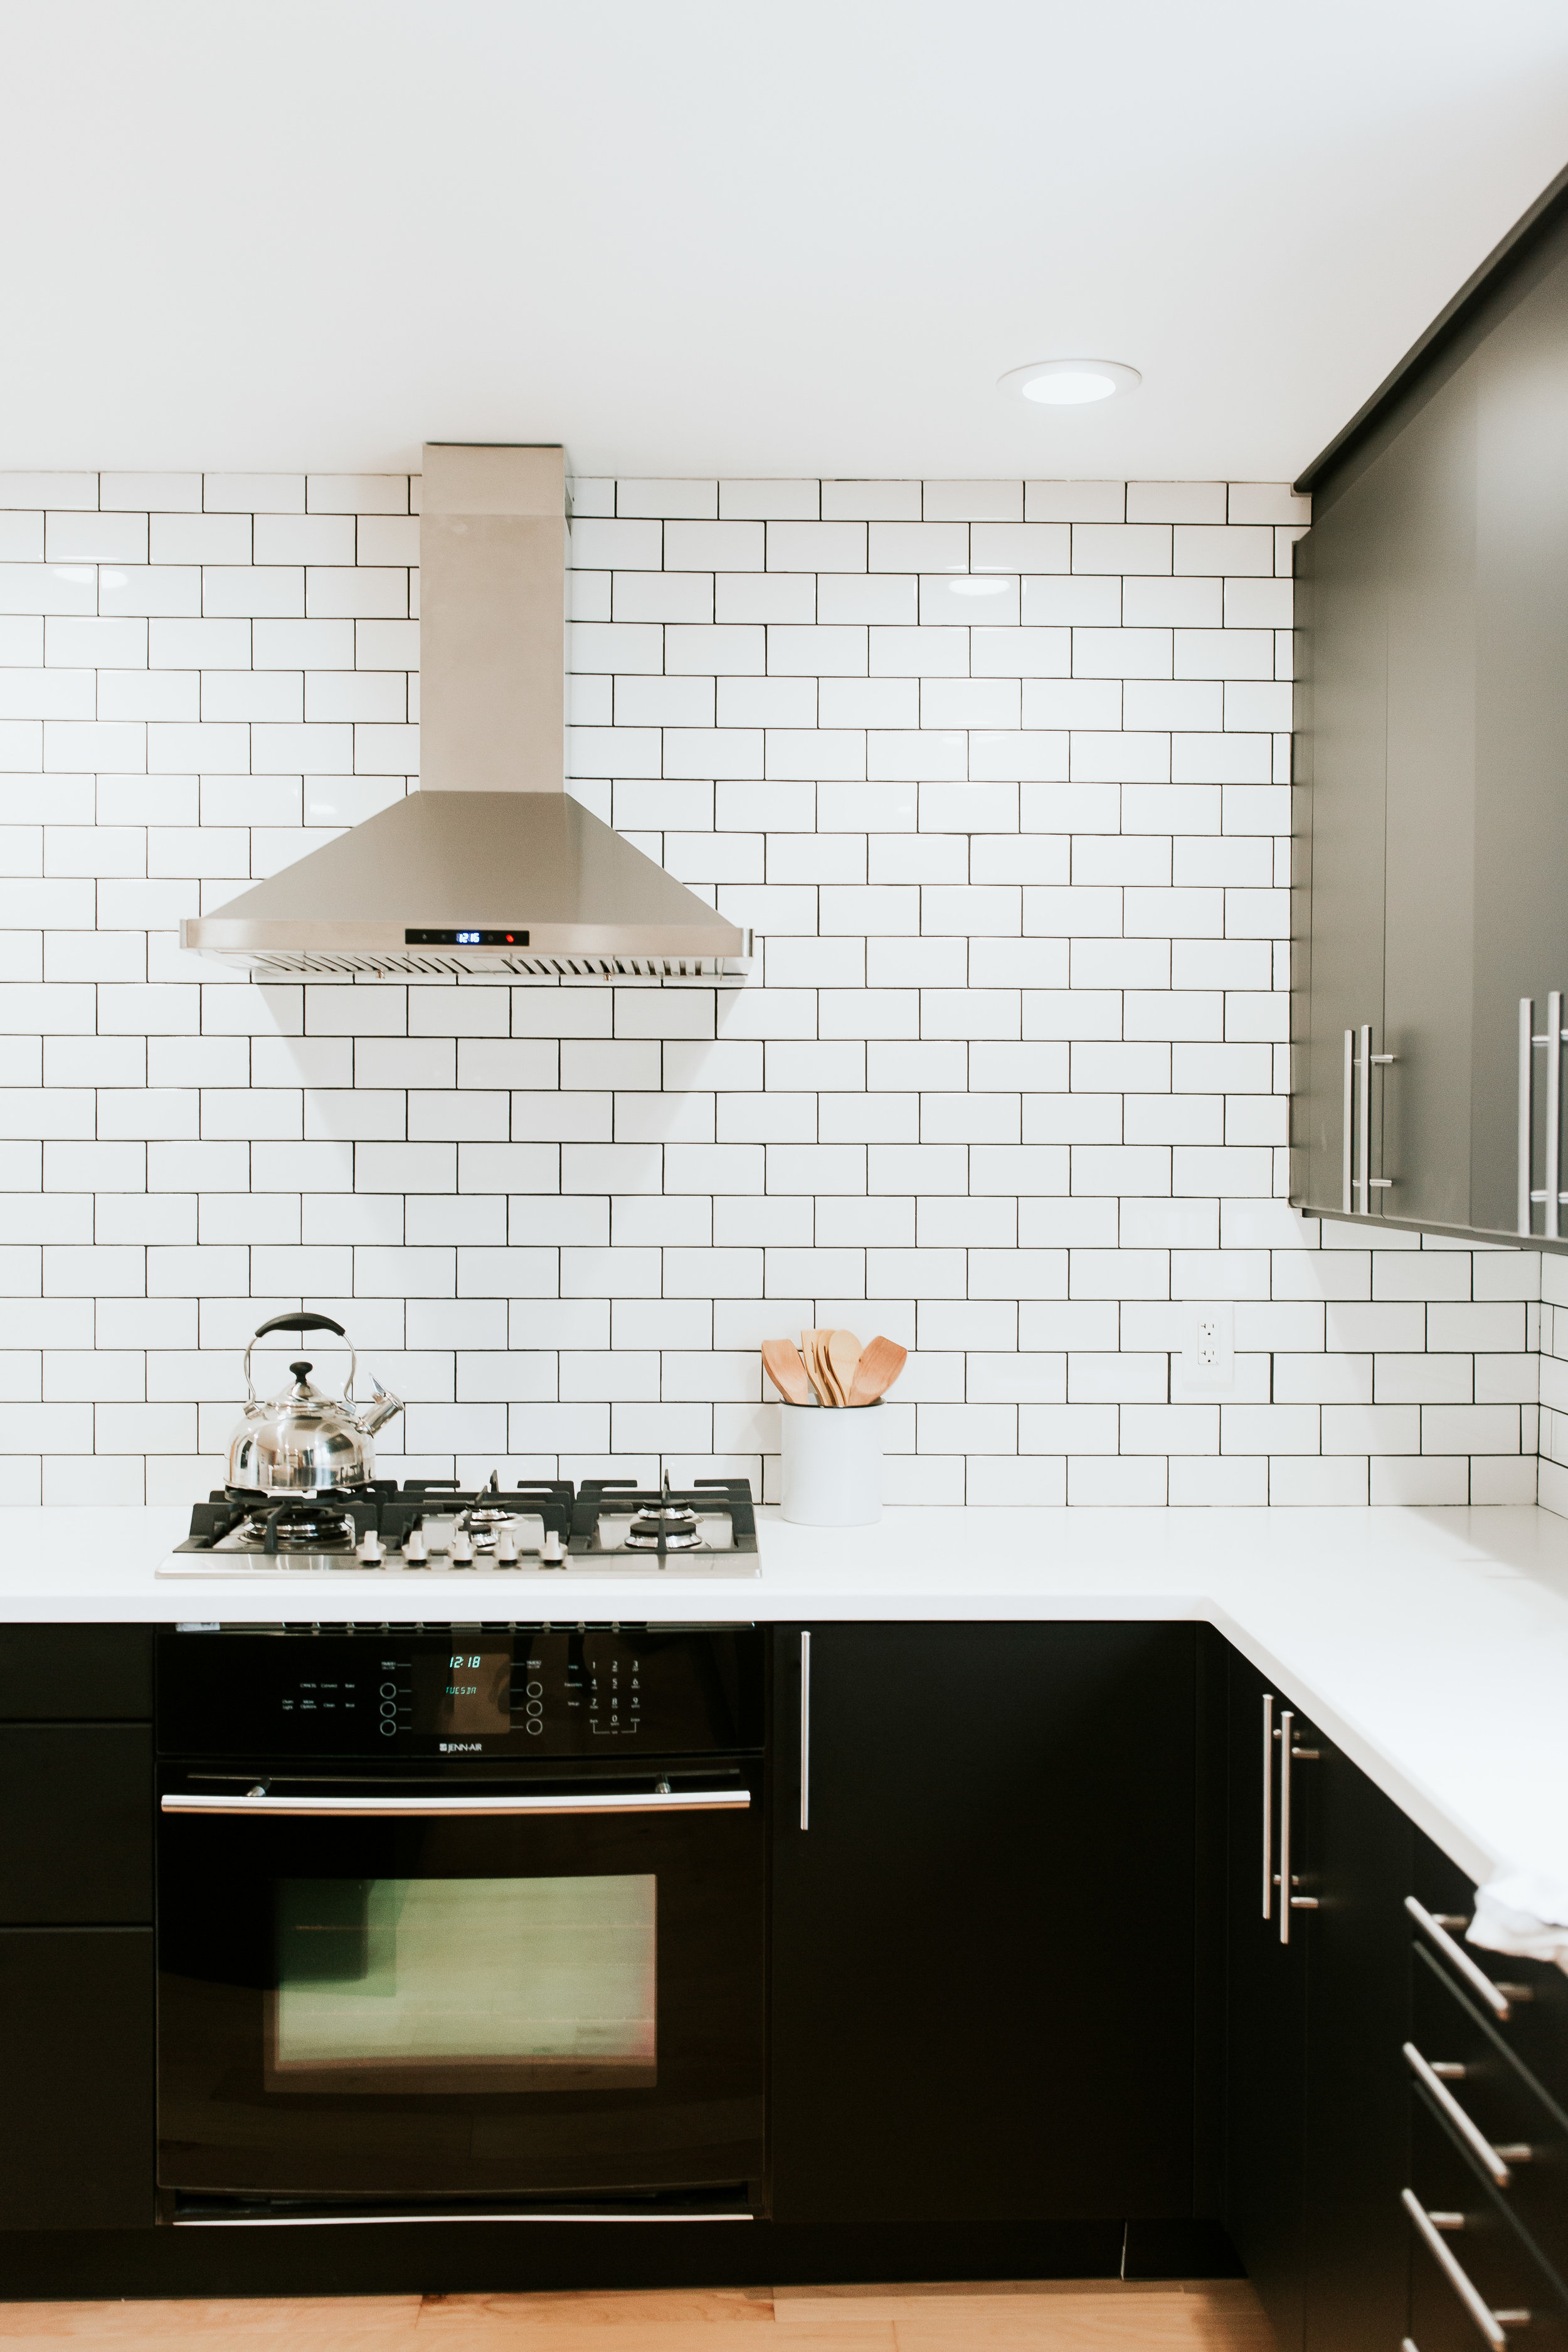 Full modern kitchen tour - Ikea Kungsbacka cabinets, subway tile, light wood floors, range hood